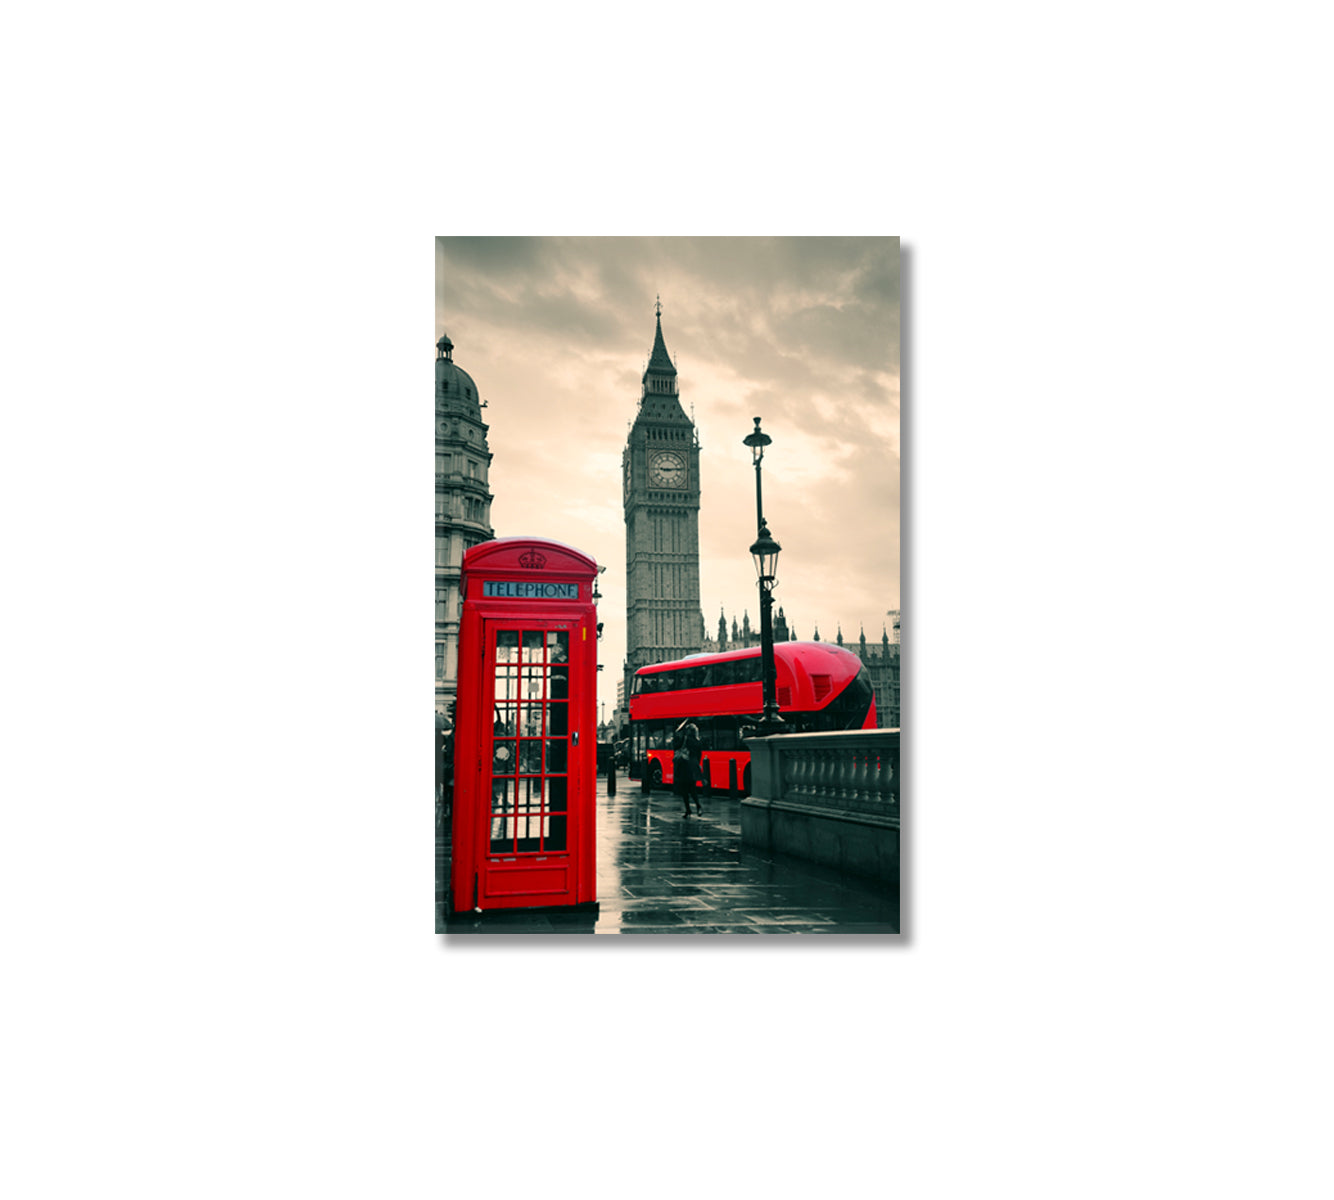 London Red Telephone Box Art Print-Canvas Print-CetArt-1 panel-16x24 inches-CetArt